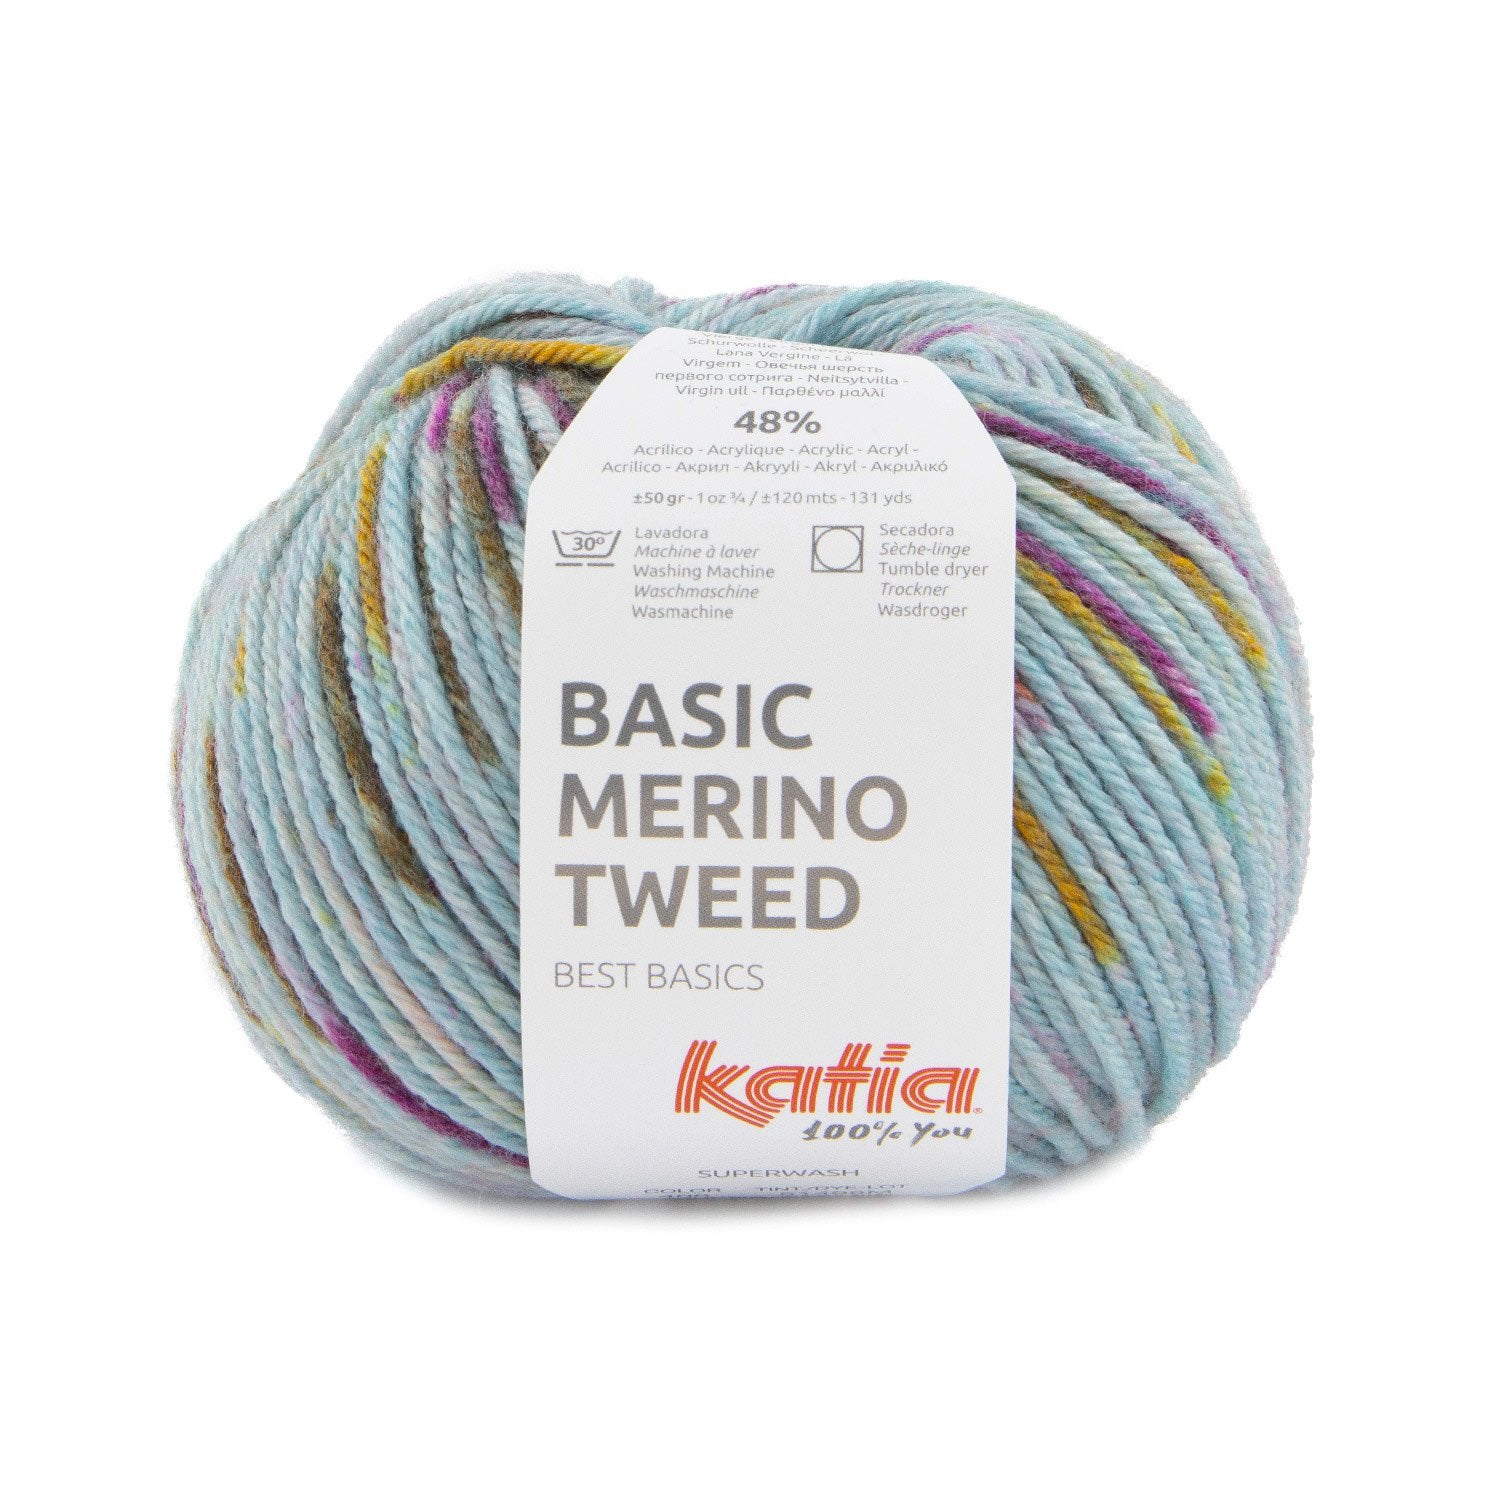 Katia Basic Merino Tweed - Soft wool for knitting autumn and winter garments